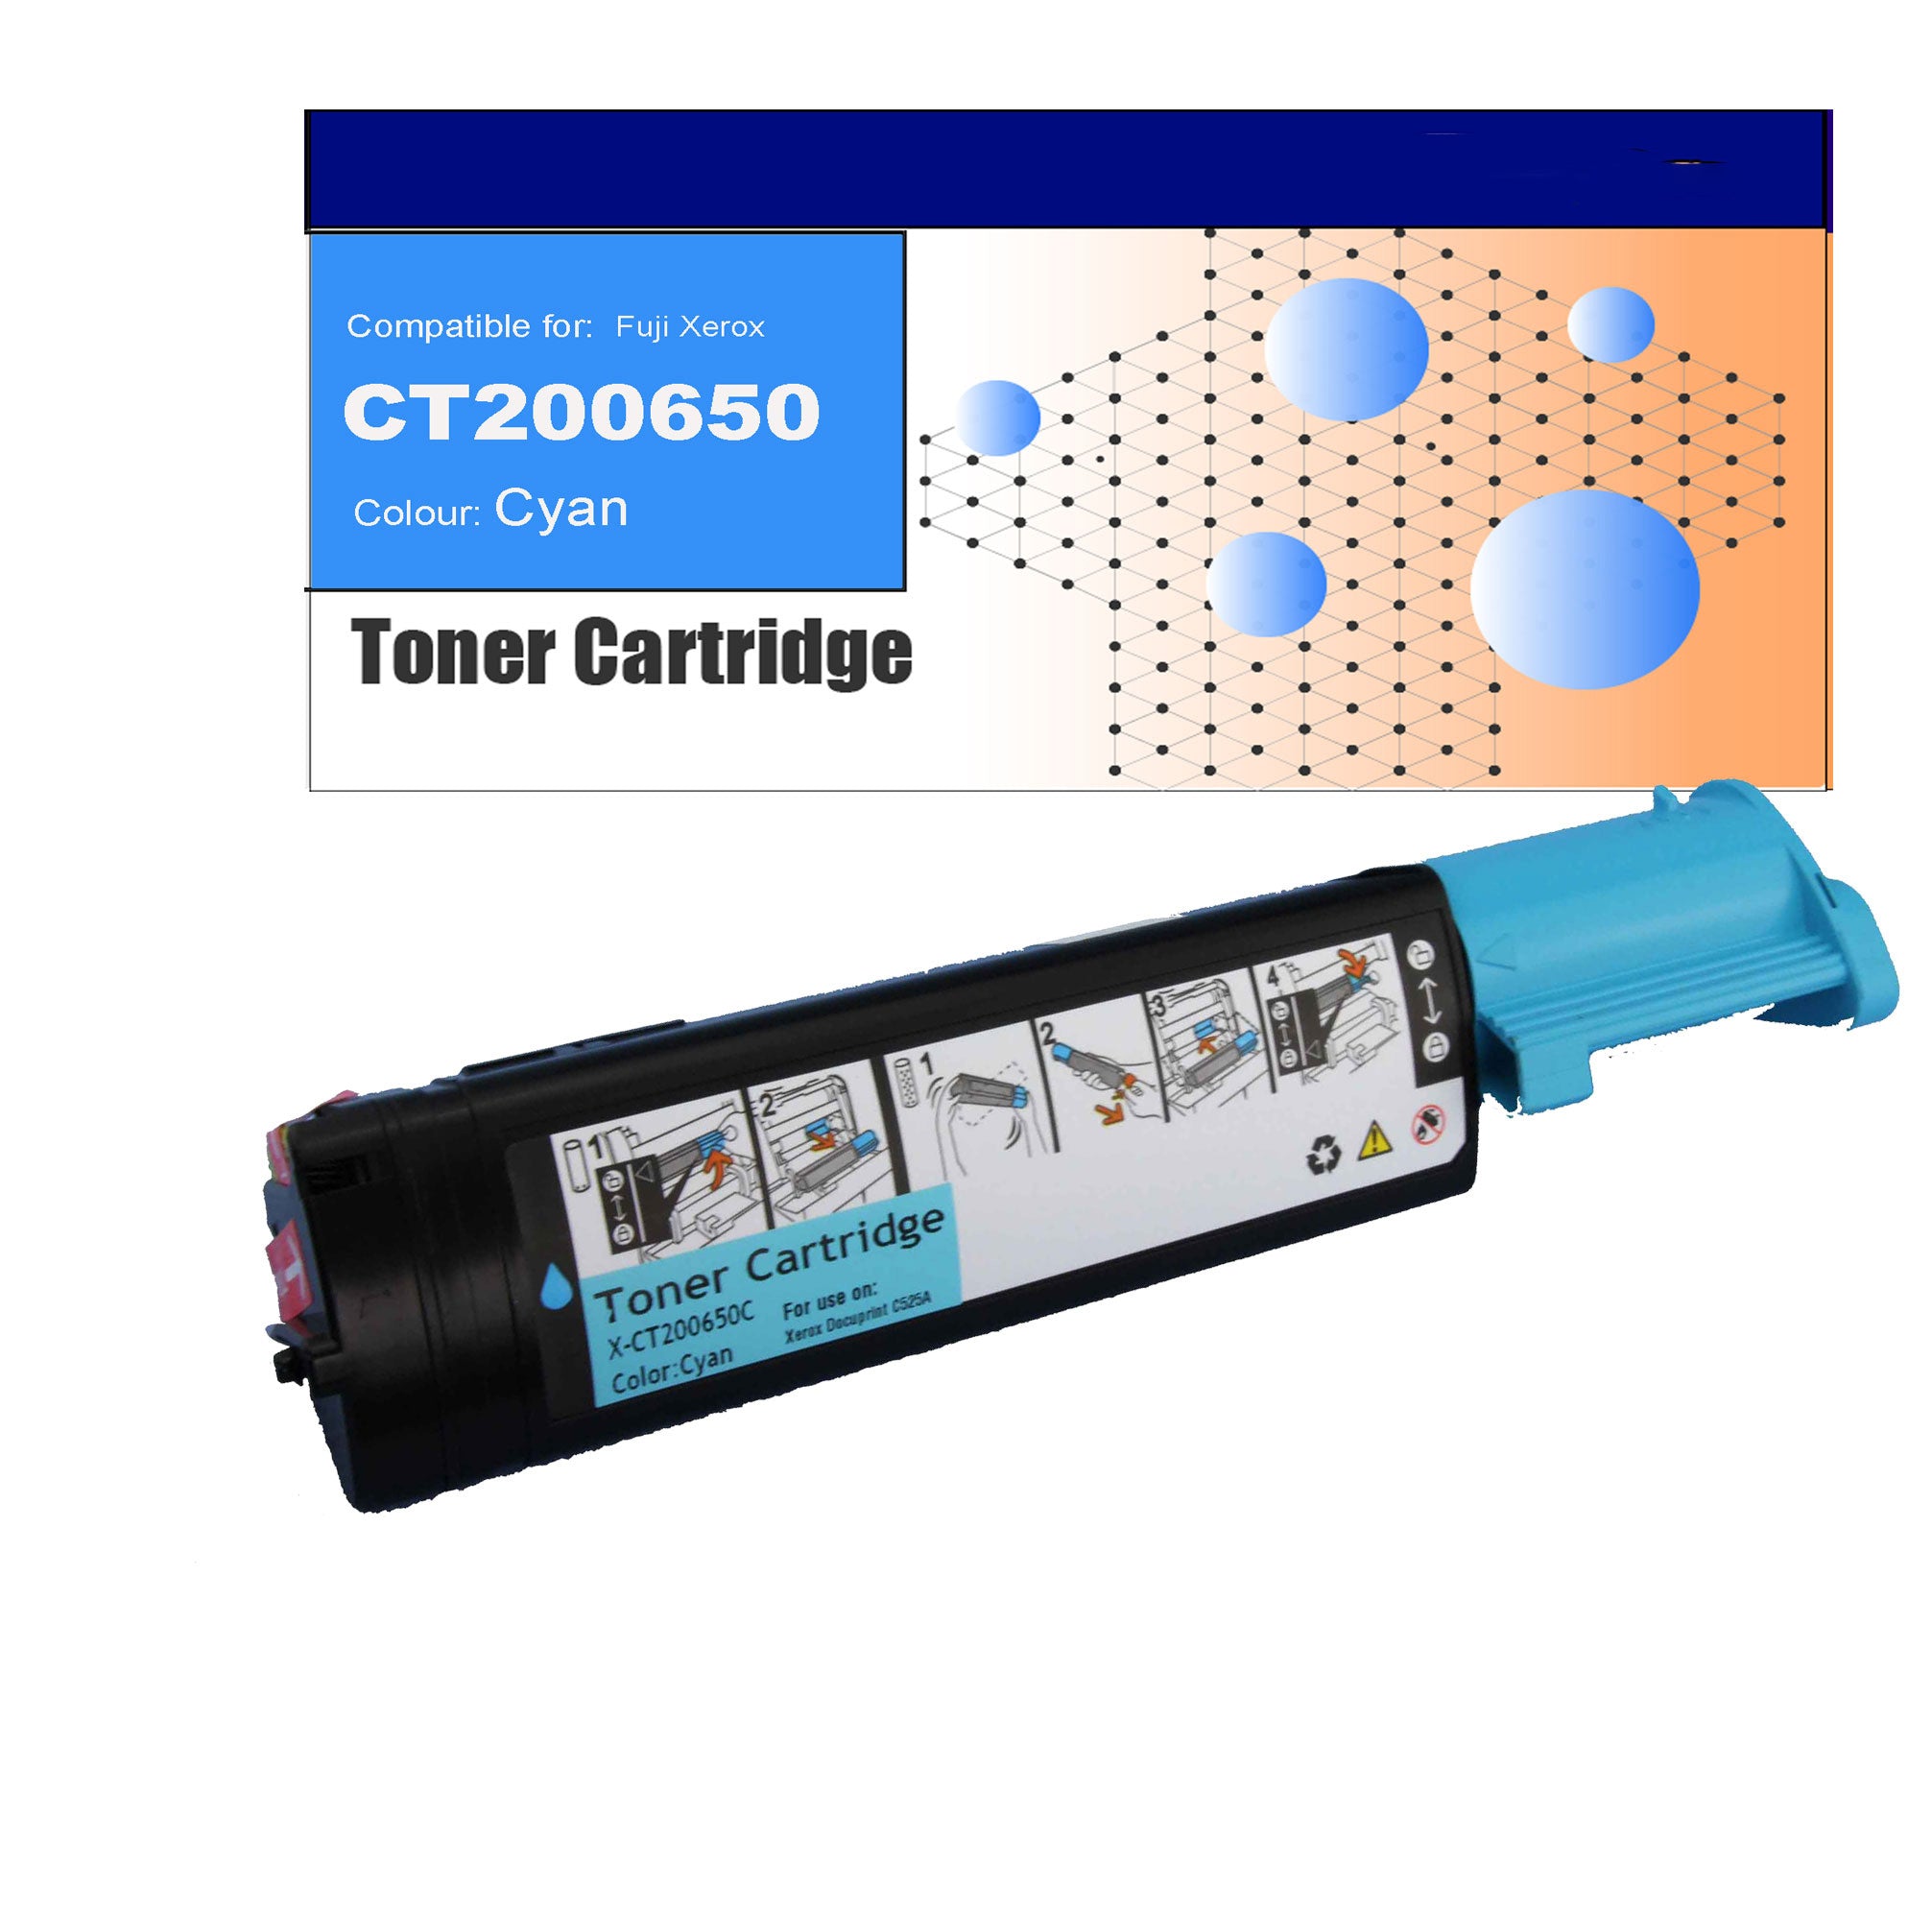 Compatible Toner for  Fuji Xerox CT200650 (C525A) Cyan Toner Cartridges